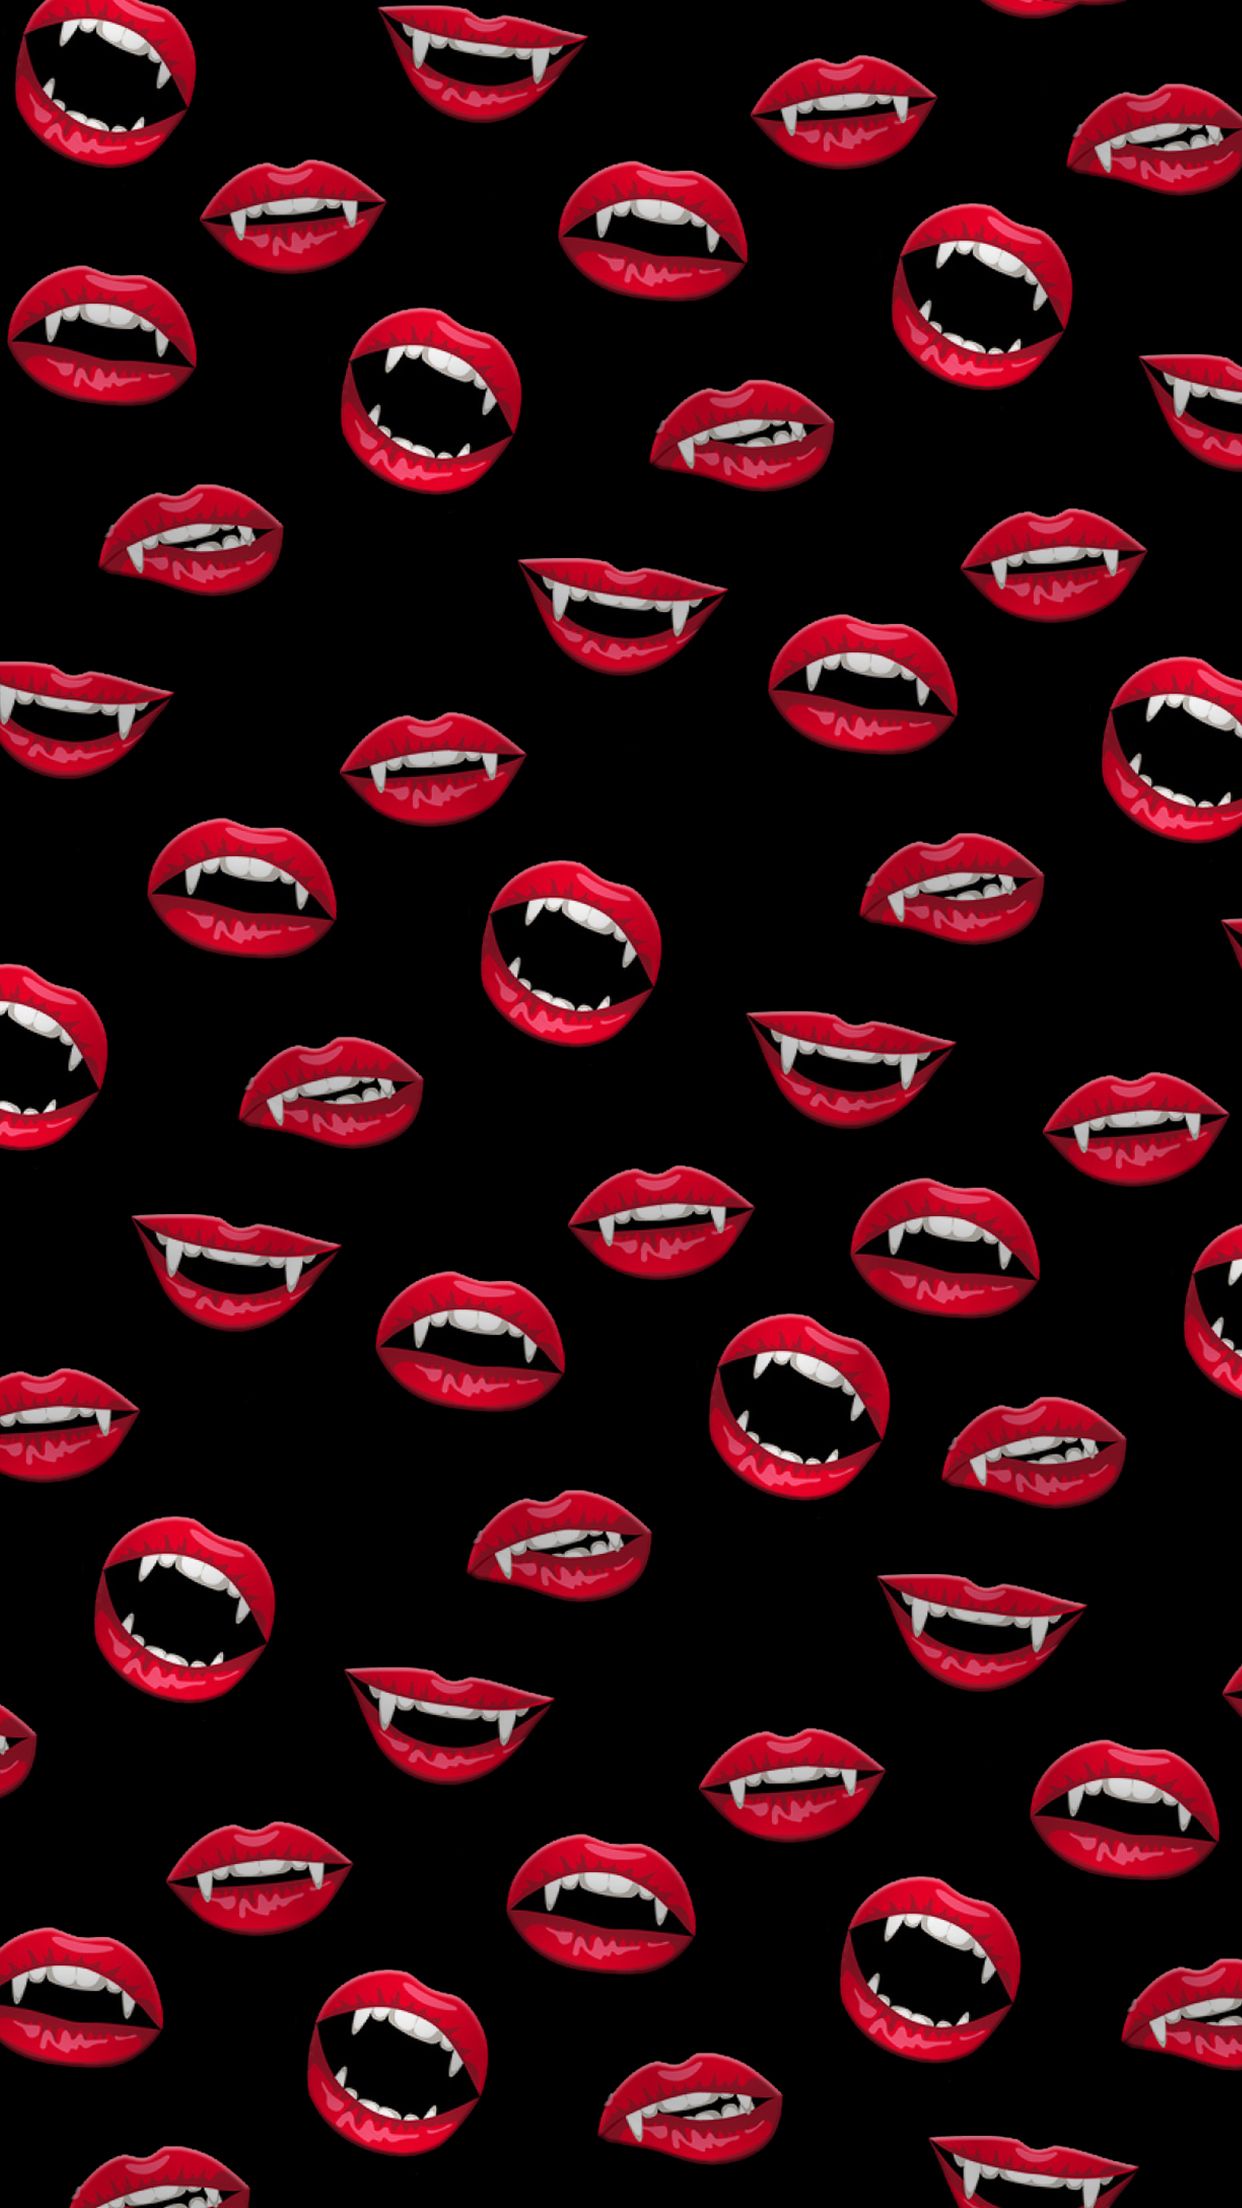 Vampire Teeth Wallpaper & Background Beautiful Best Available For Download Vampire Teeth Photo Free On Zicxa.com Image